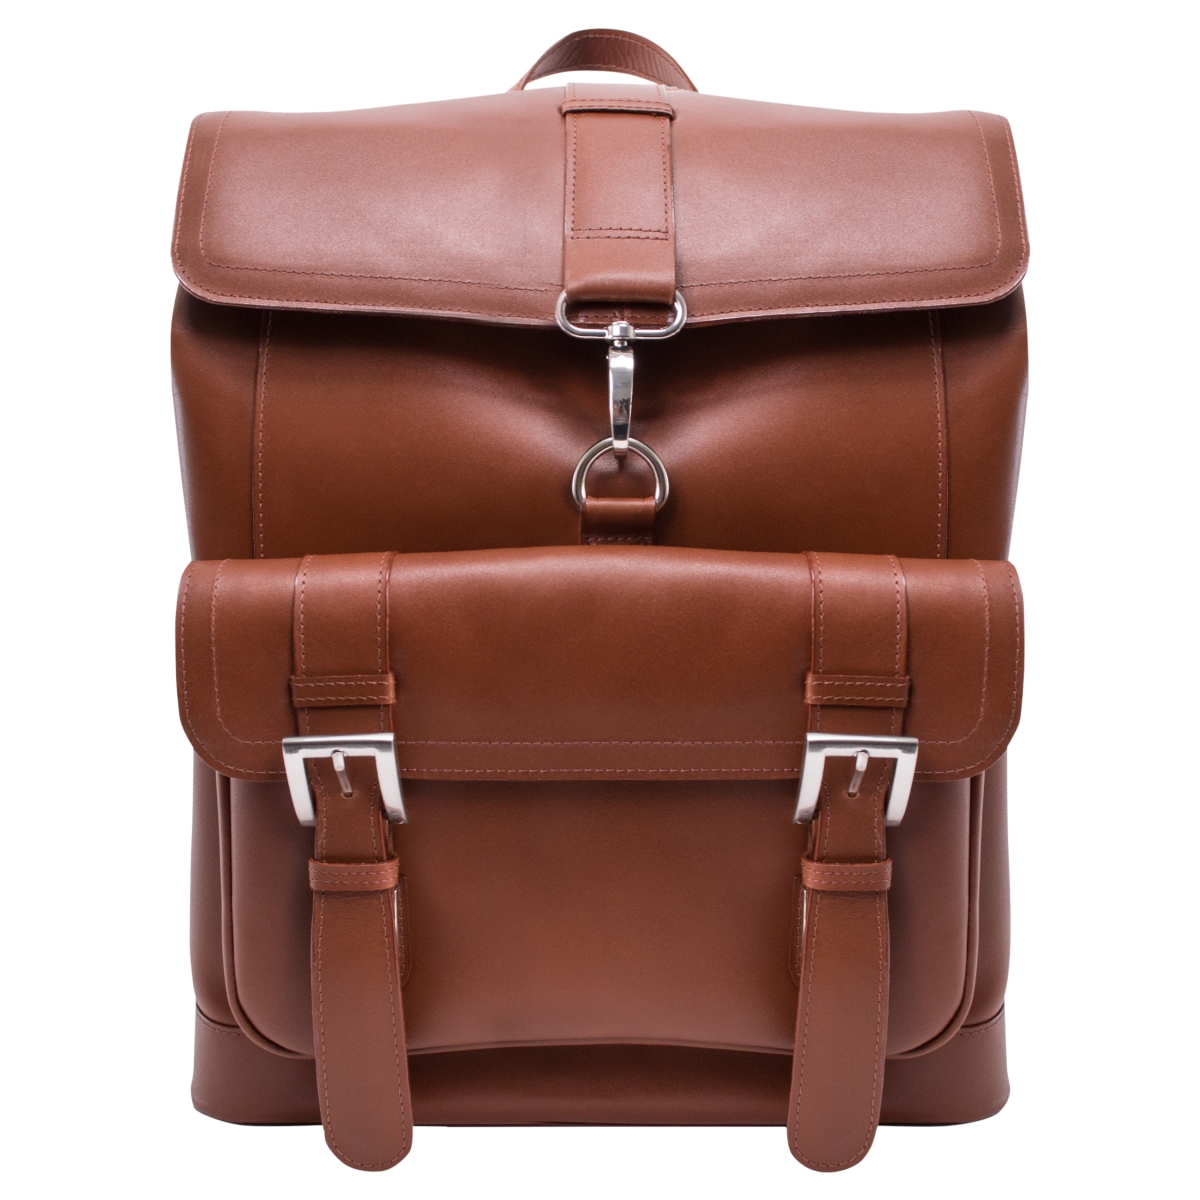 Hagen Leather Laptop Backpack, Brown